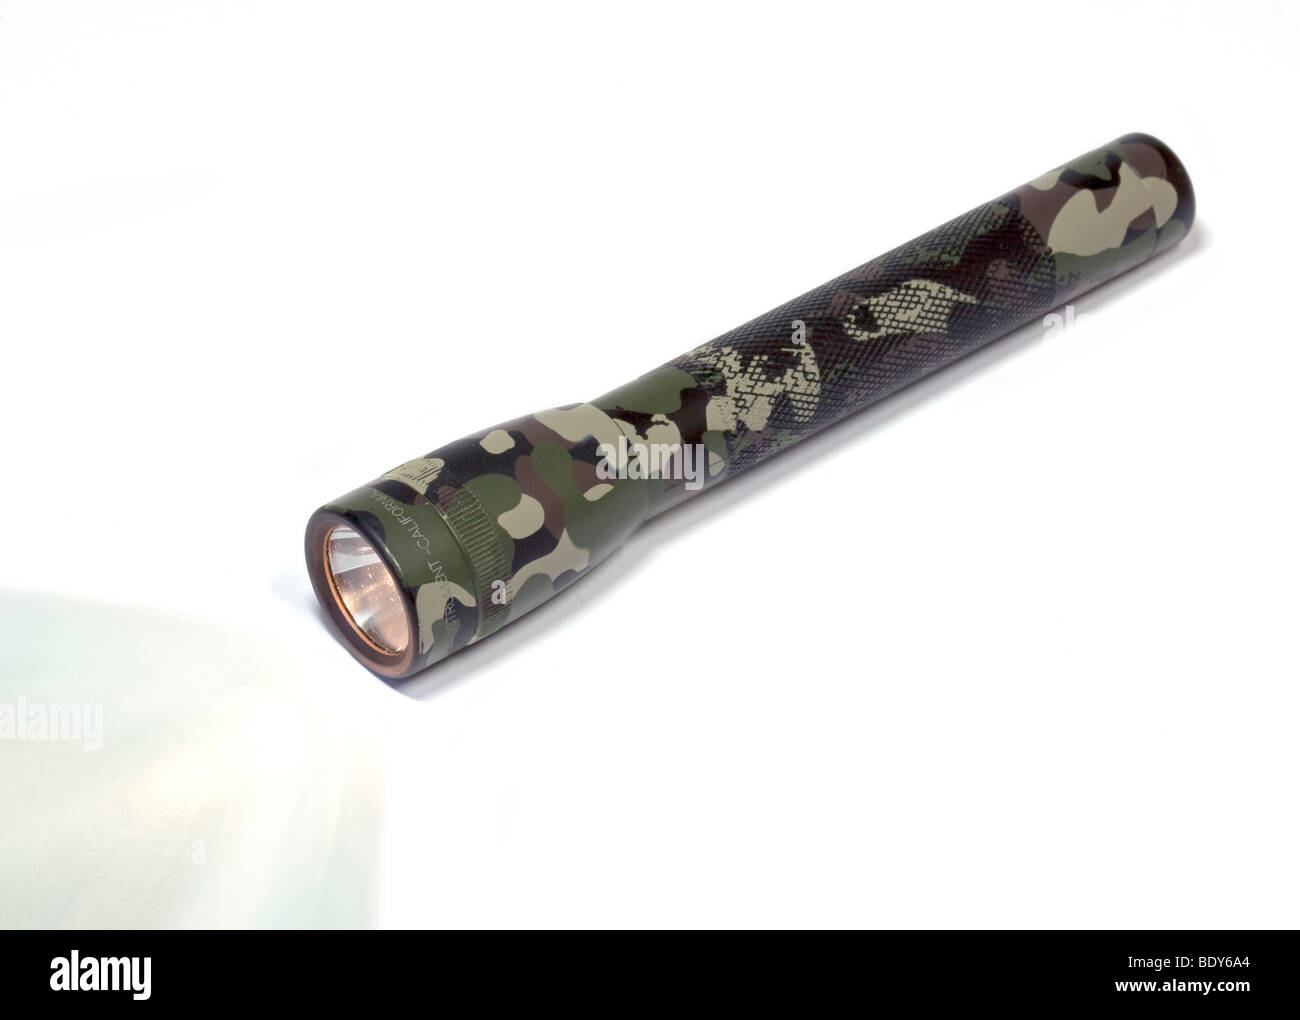 Linterna Maglite-estampado de camuflaje Foto de stock